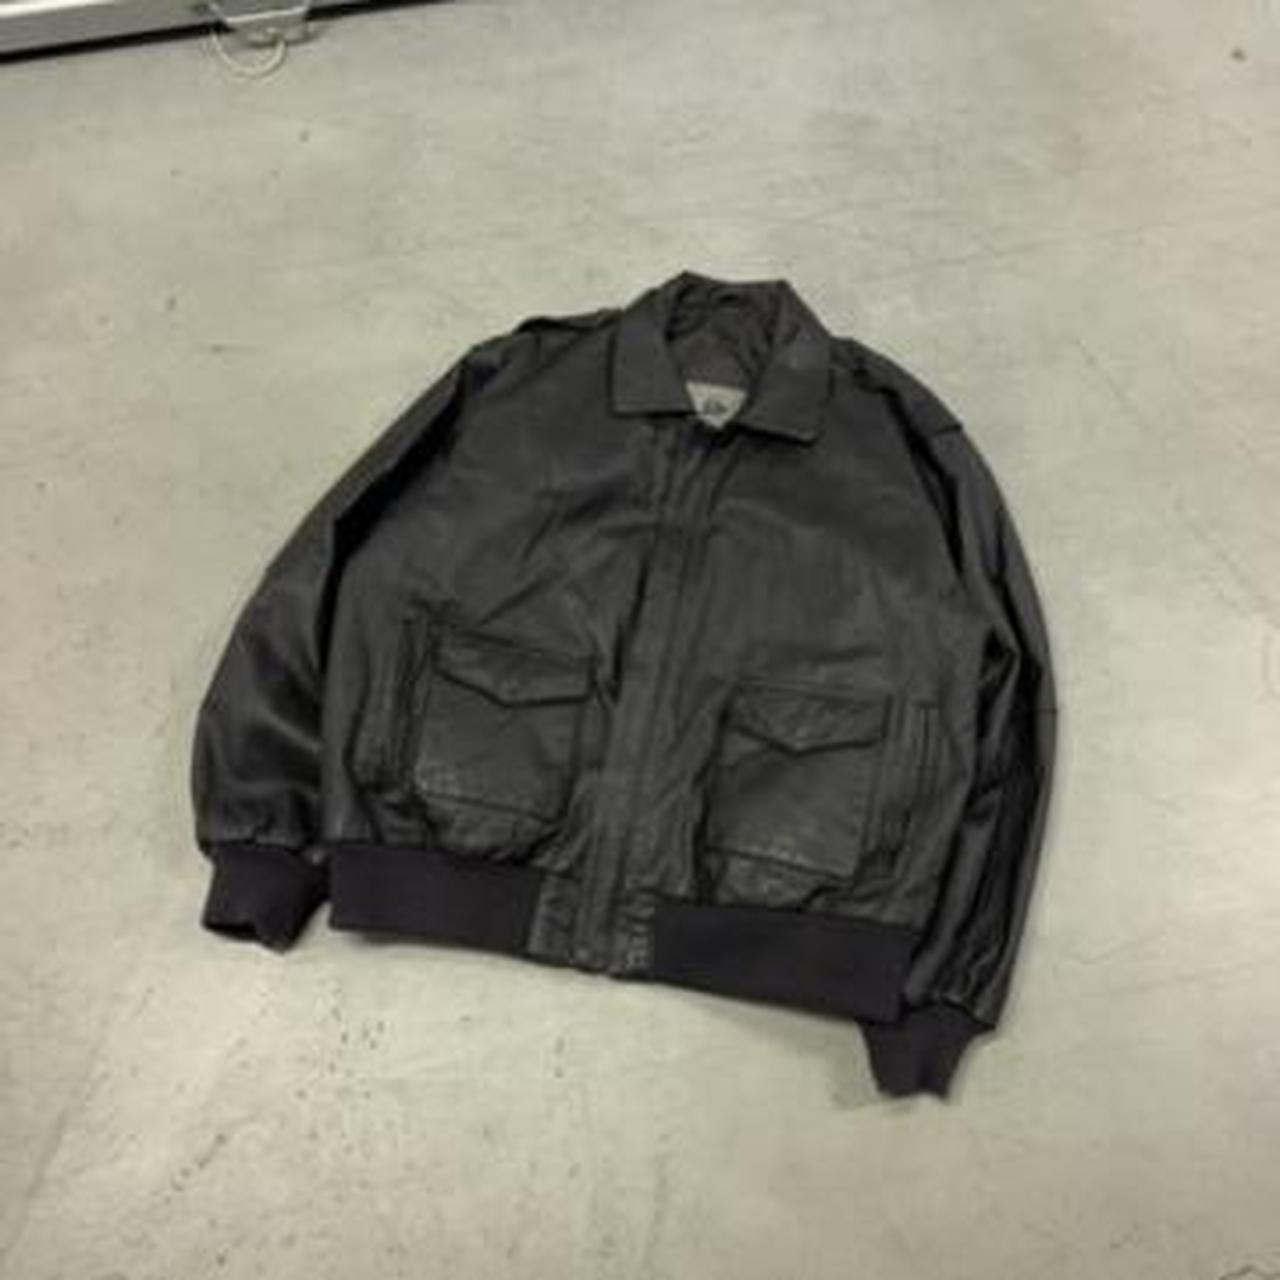 Vintage 90s Type A-2 Leather Jacket Unlucky Vintage... - Depop